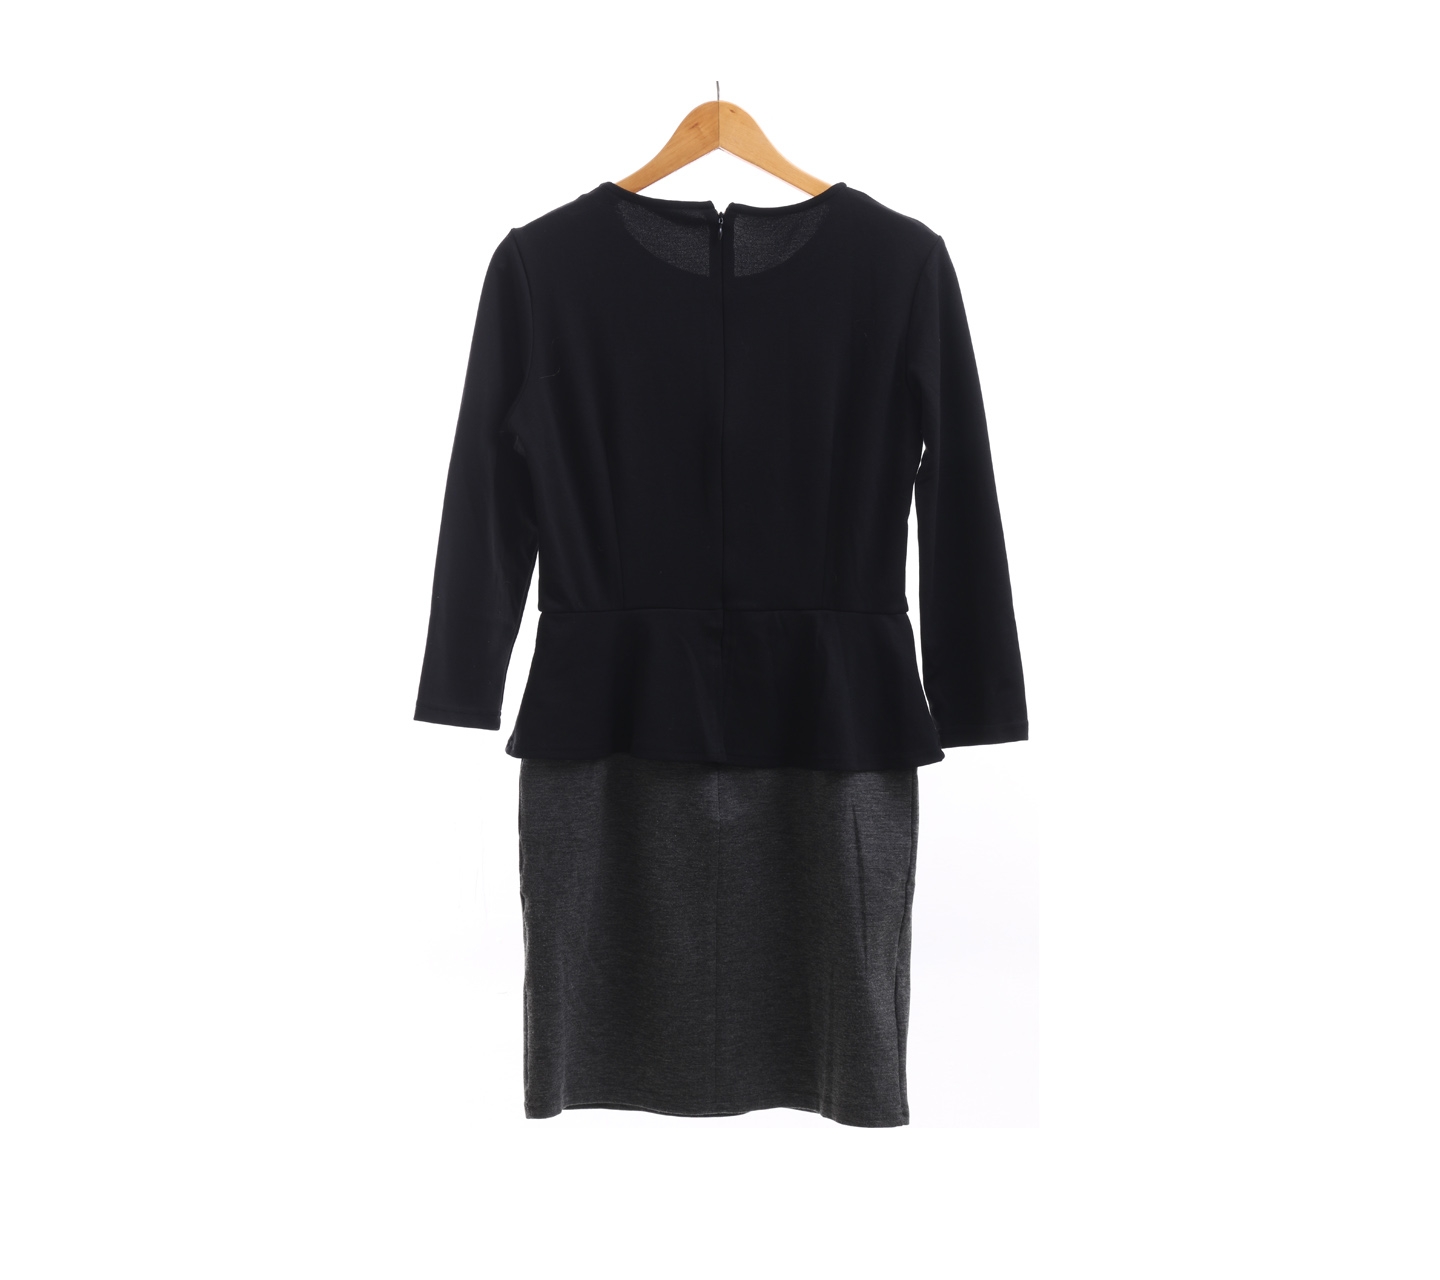 Uniqlo Black & Grey Peplum Mini Dress